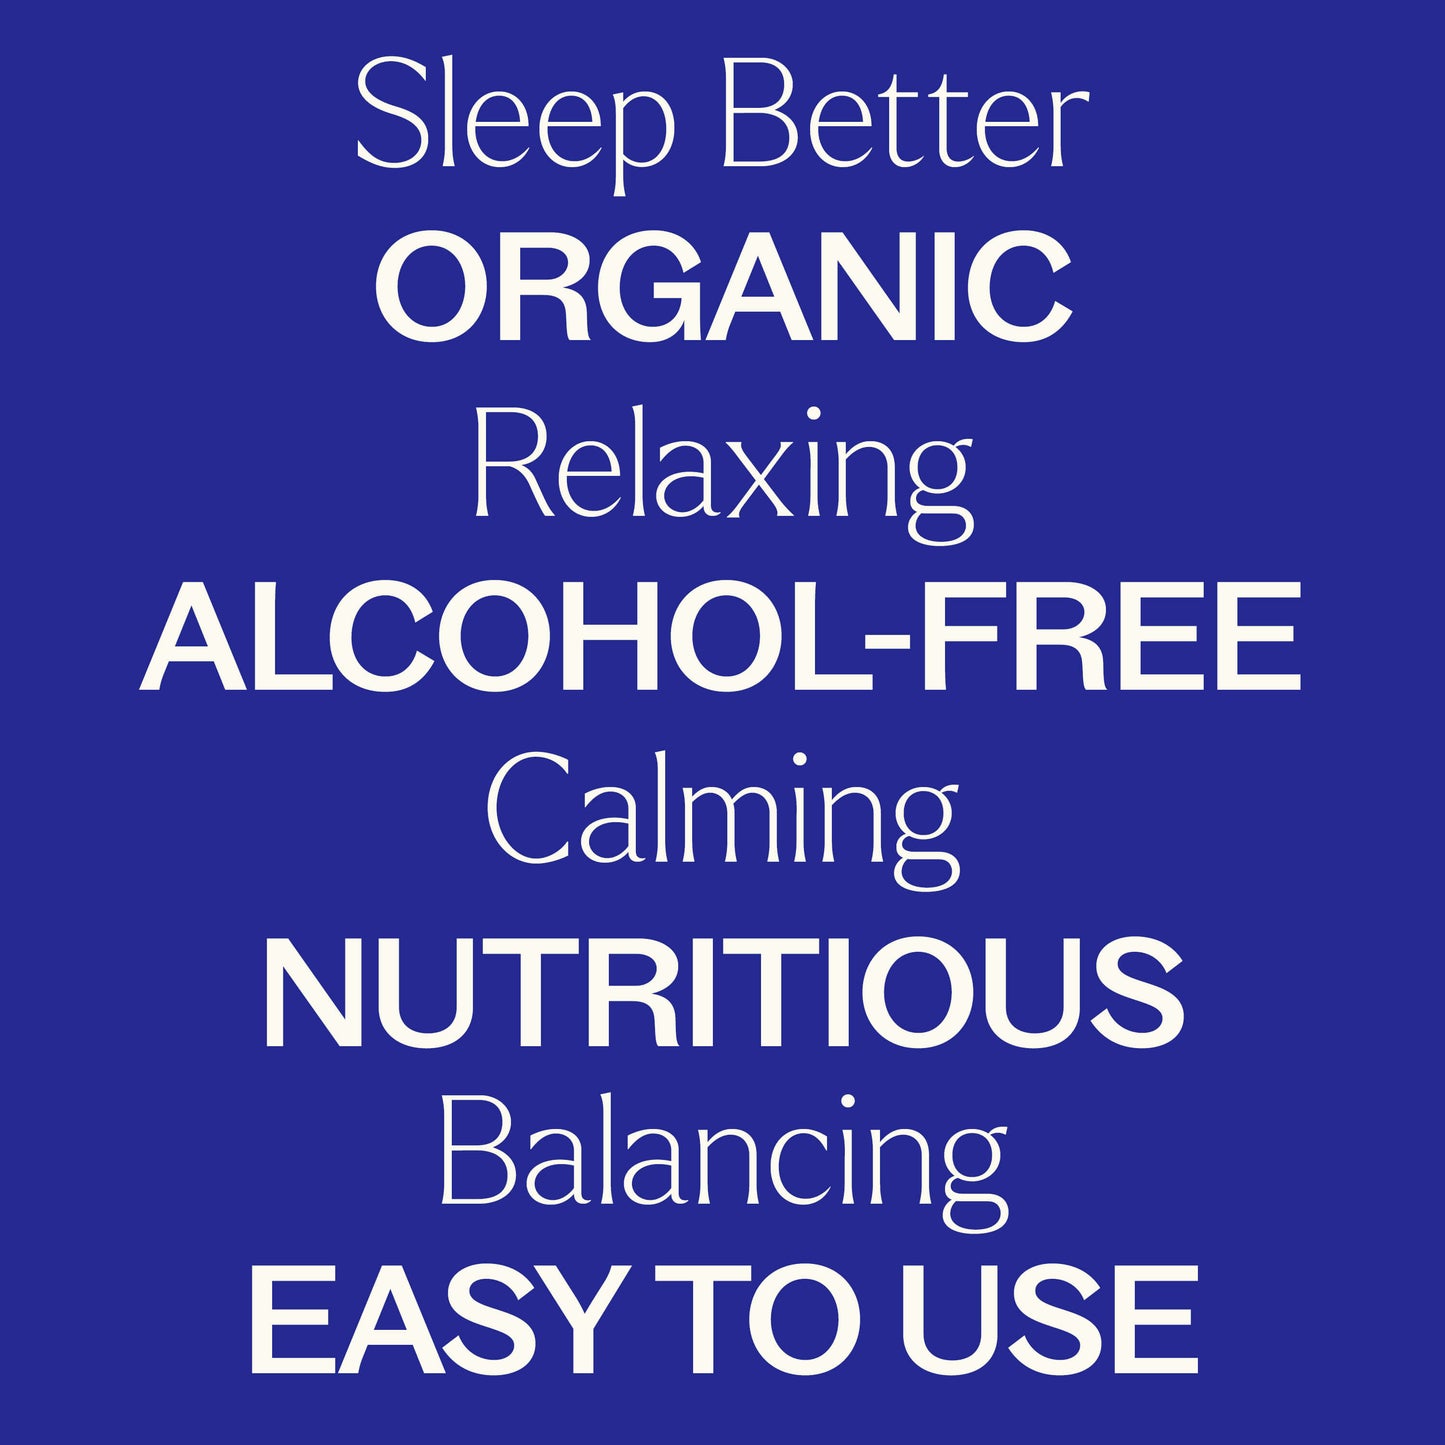 Sleep better, relaxing, calming, balancing. Organic, alcohol free nutritious, easy